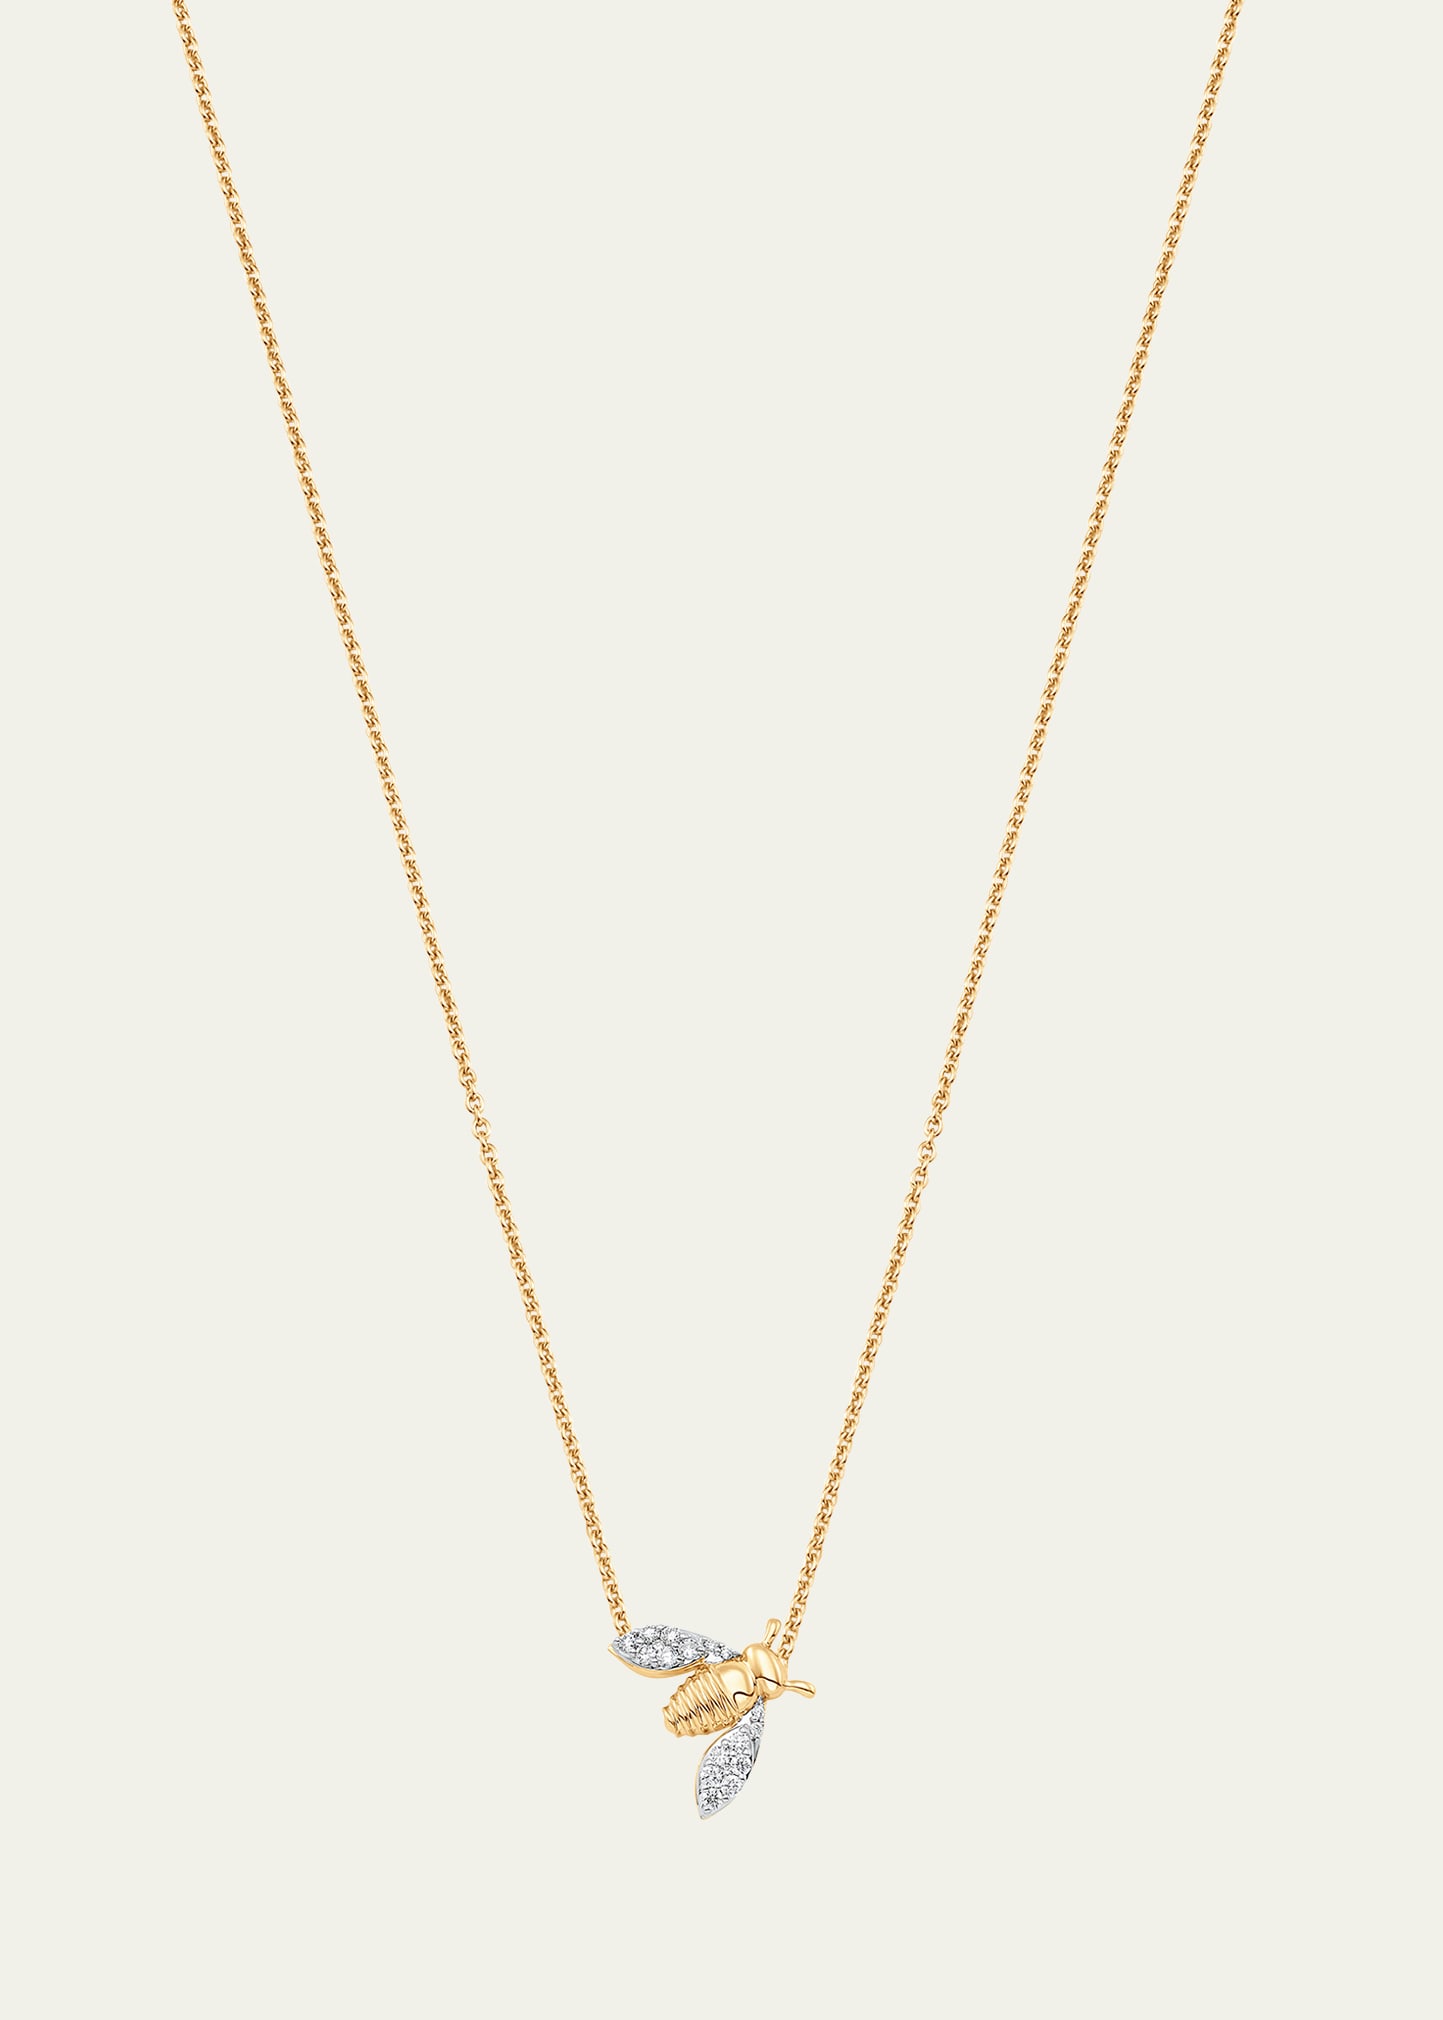 18K Two-Tone Gold Queen Bee Diamond Petite Pendant Necklace, 16"L